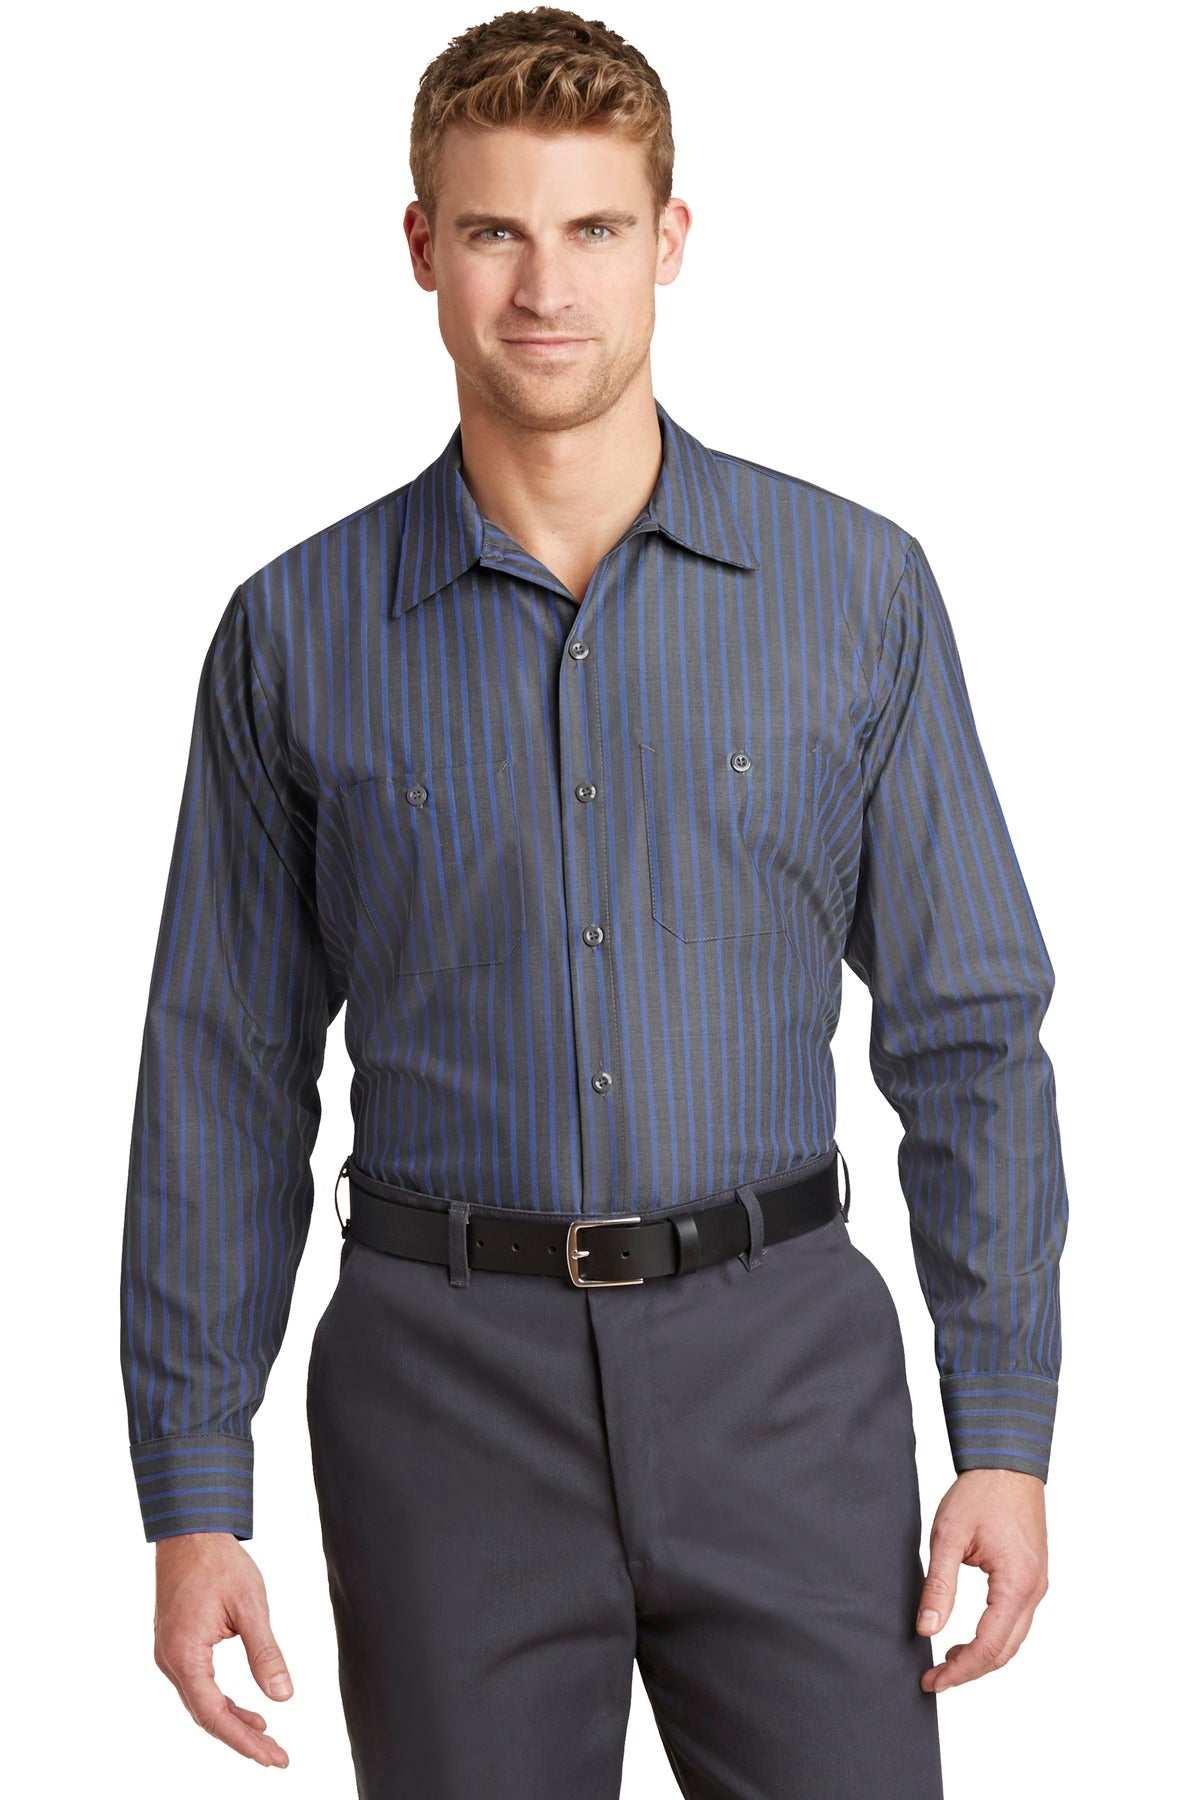 Red Kap® Long Sleeve Striped Industrial Work Shirt.  CS10